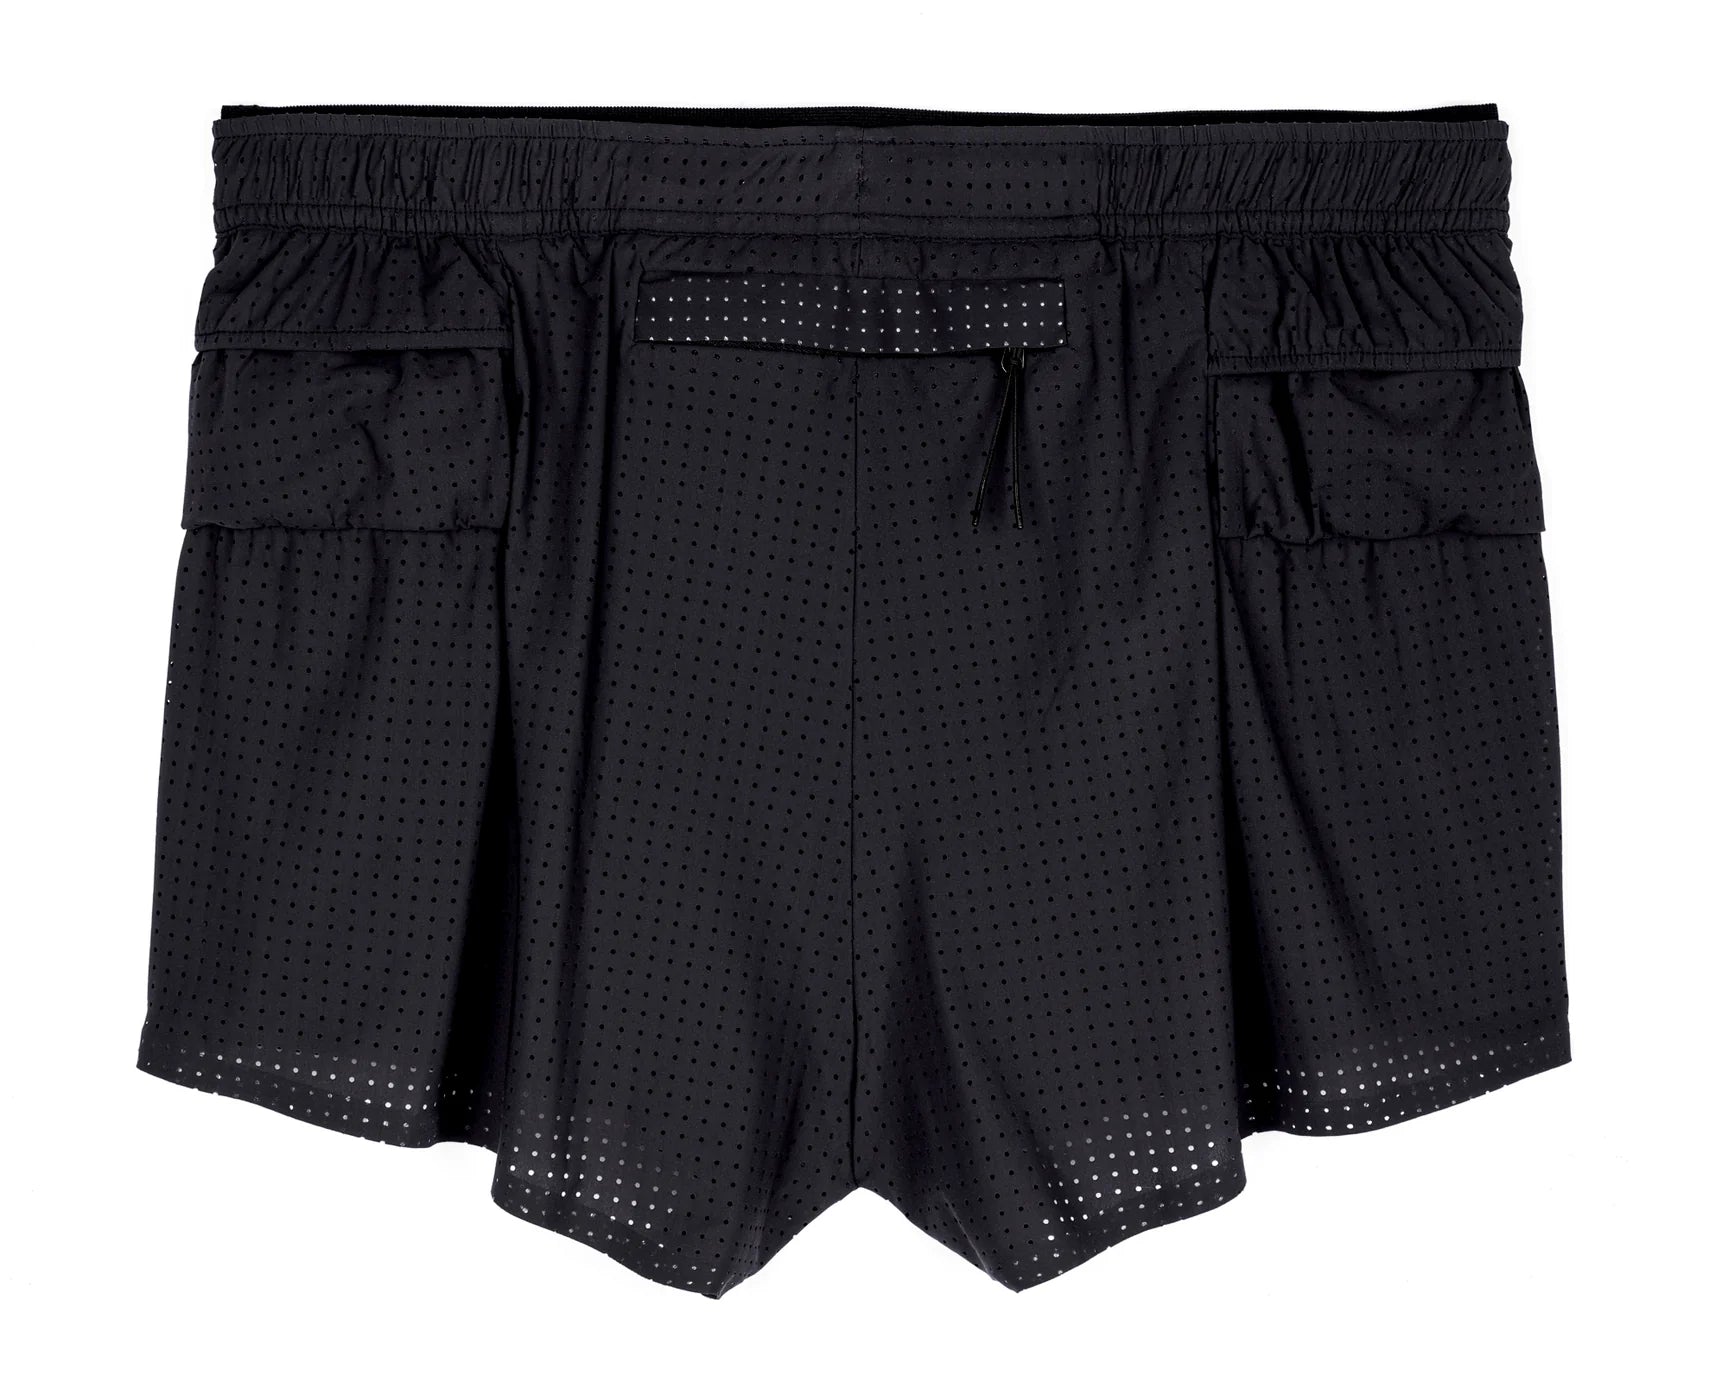 Satisfy Space-O 2.5 Inch Shorts Black at